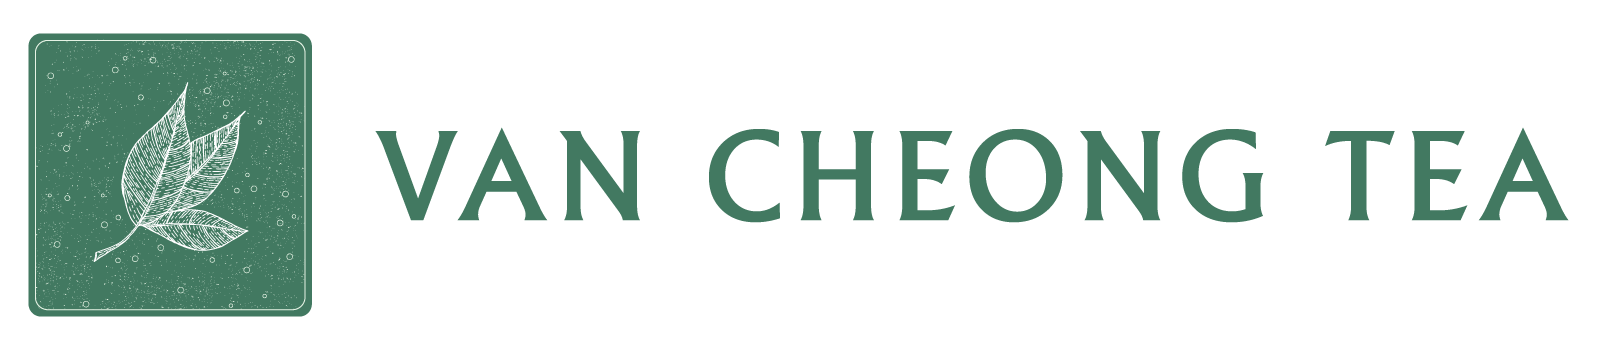 Van Cheong Tea - Linear Logo